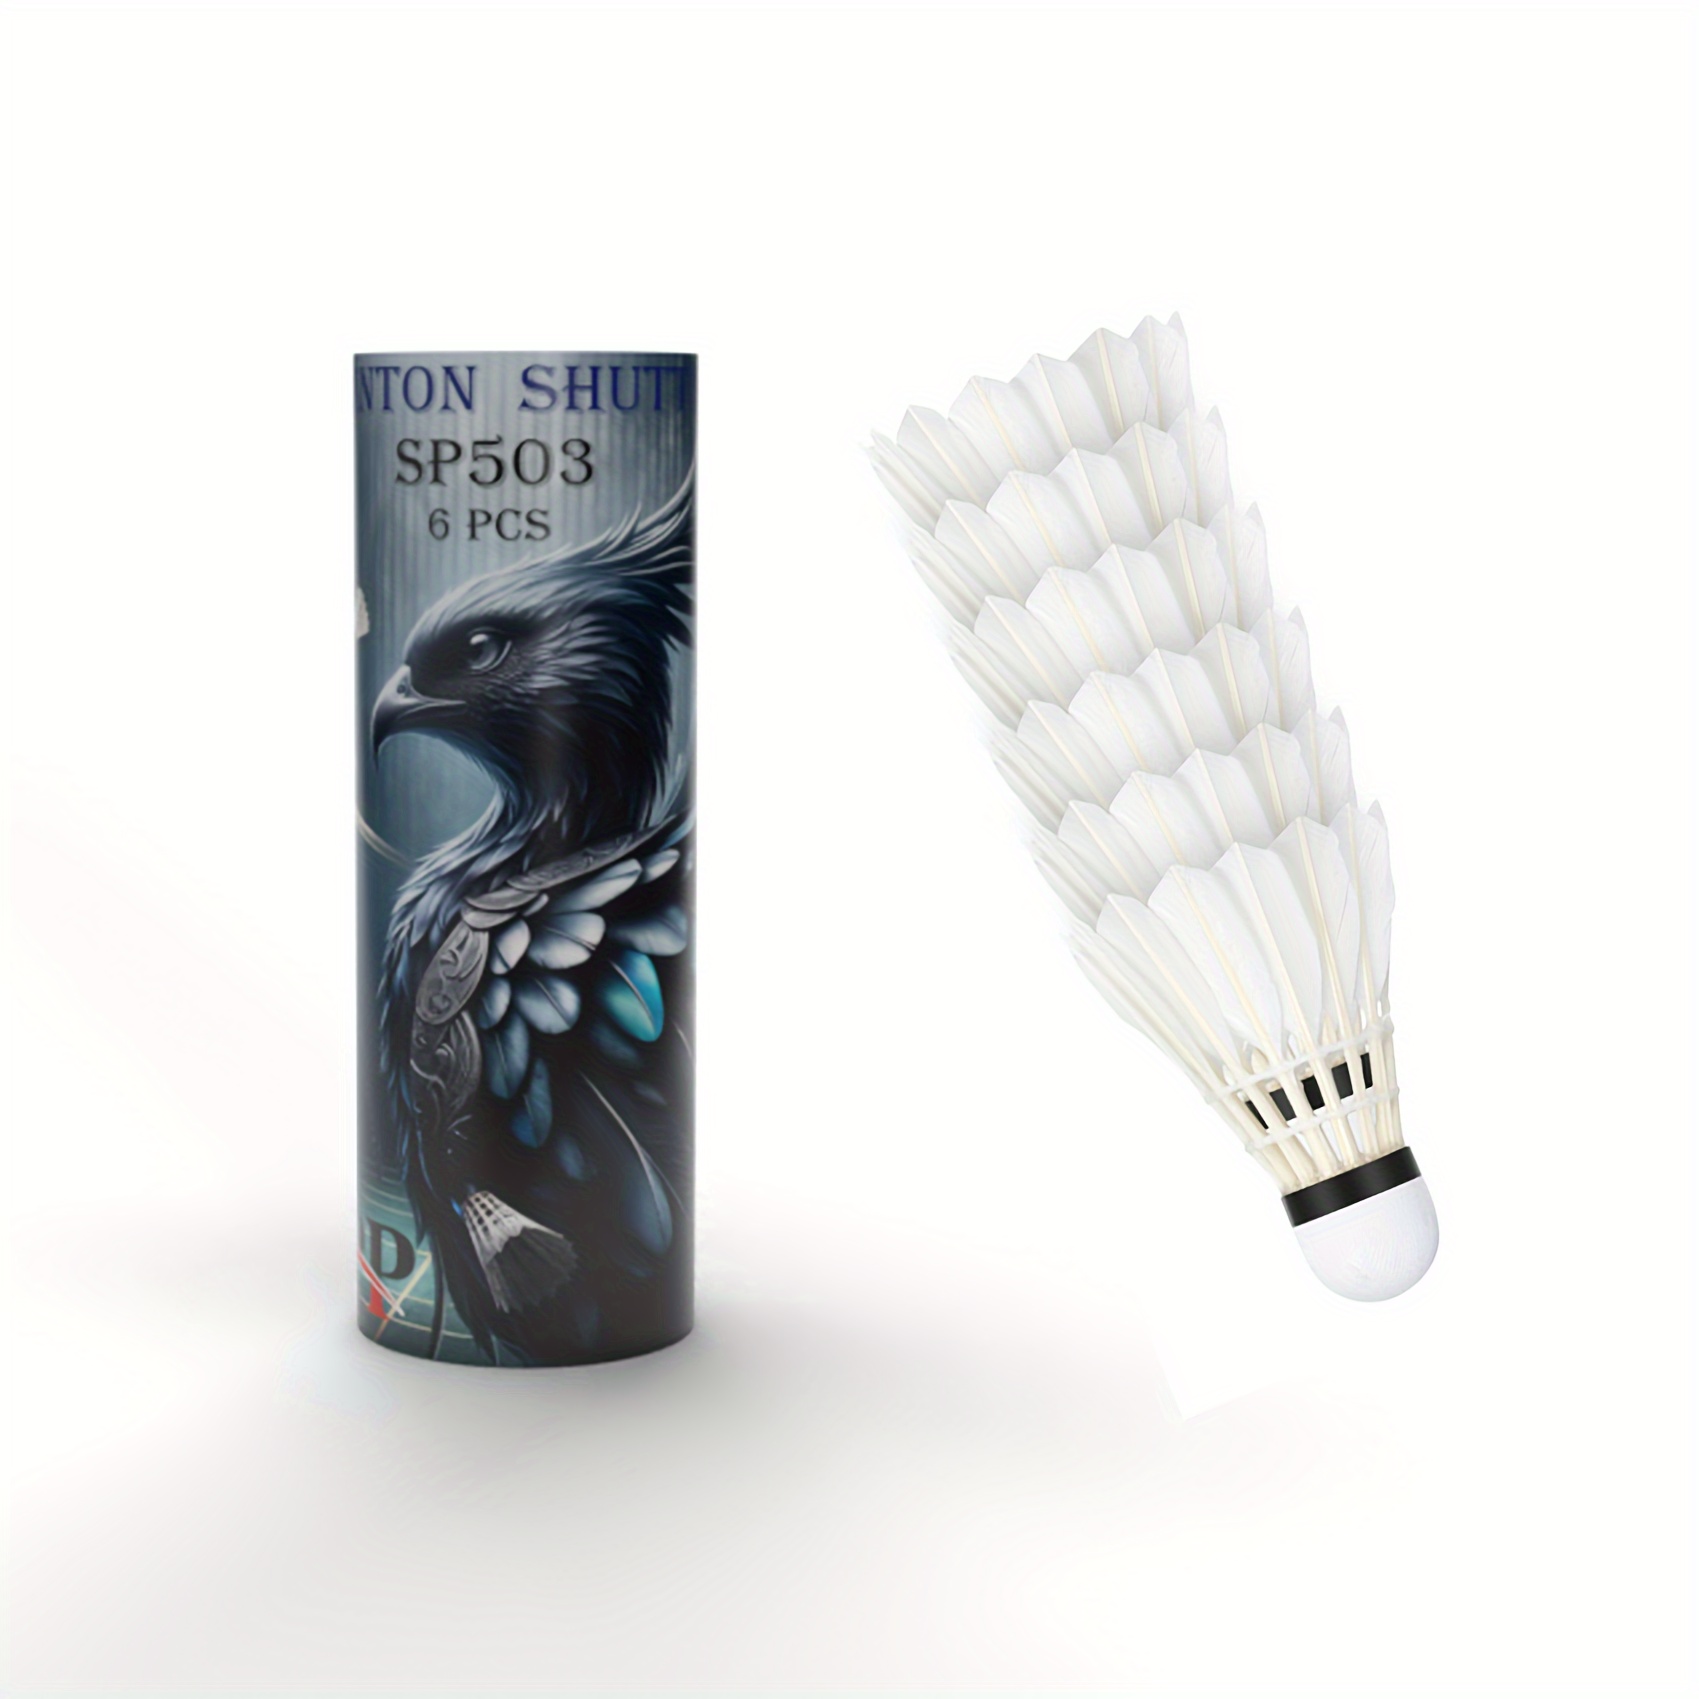 

Spphoneix 6-piece Premium Goose Feather Badminton Shuttlecocks - Durable & High-performance